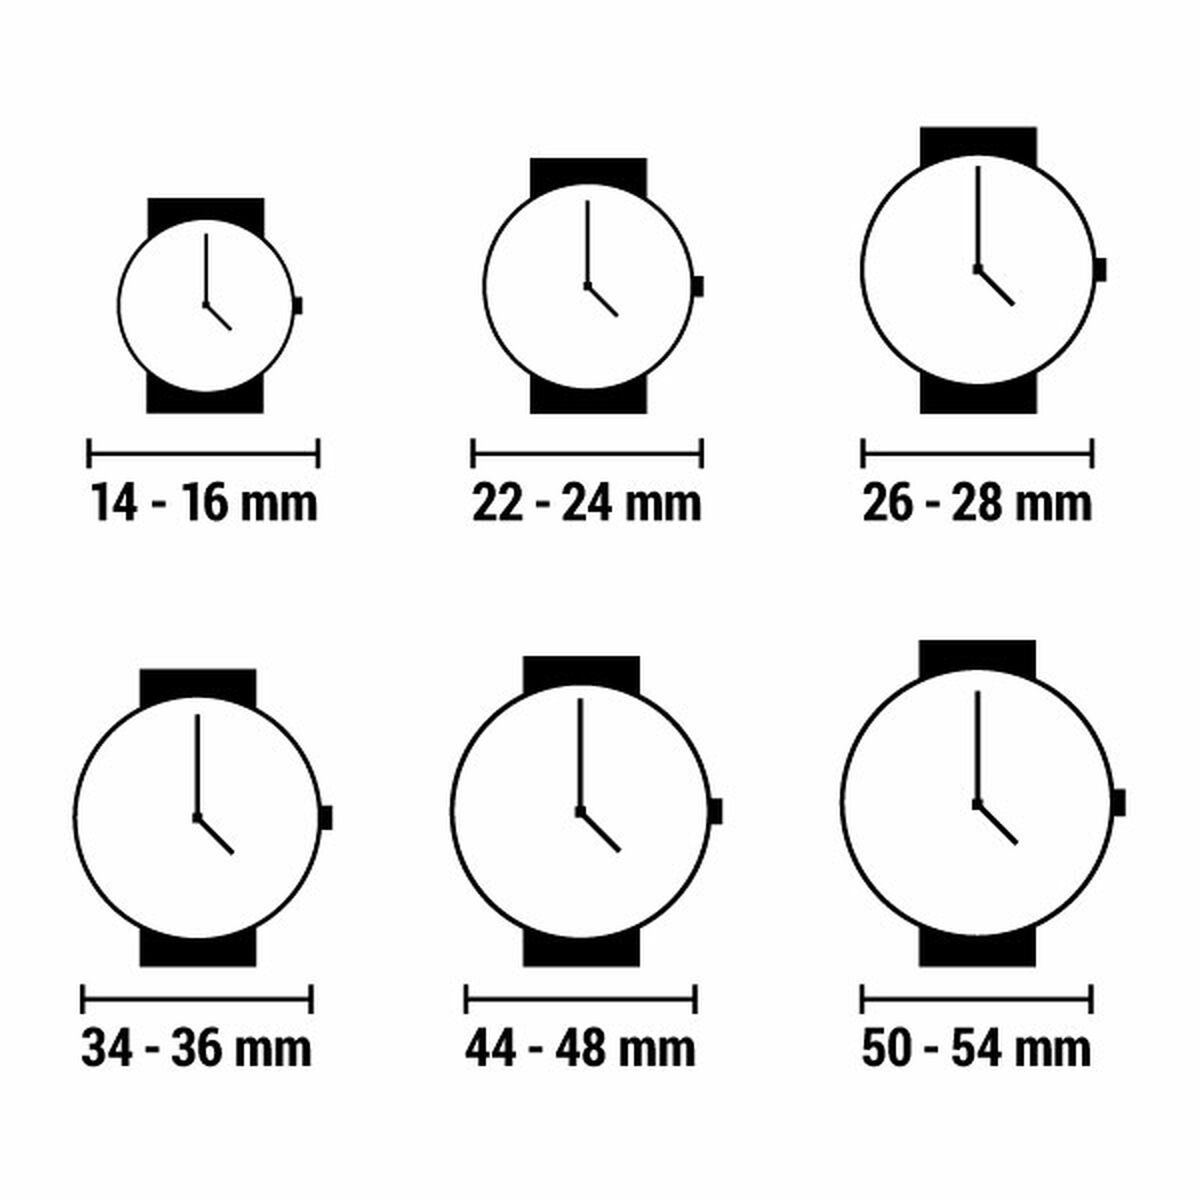 Horloge Dames Calvin Klein 25200269 (Ø 34 mm)